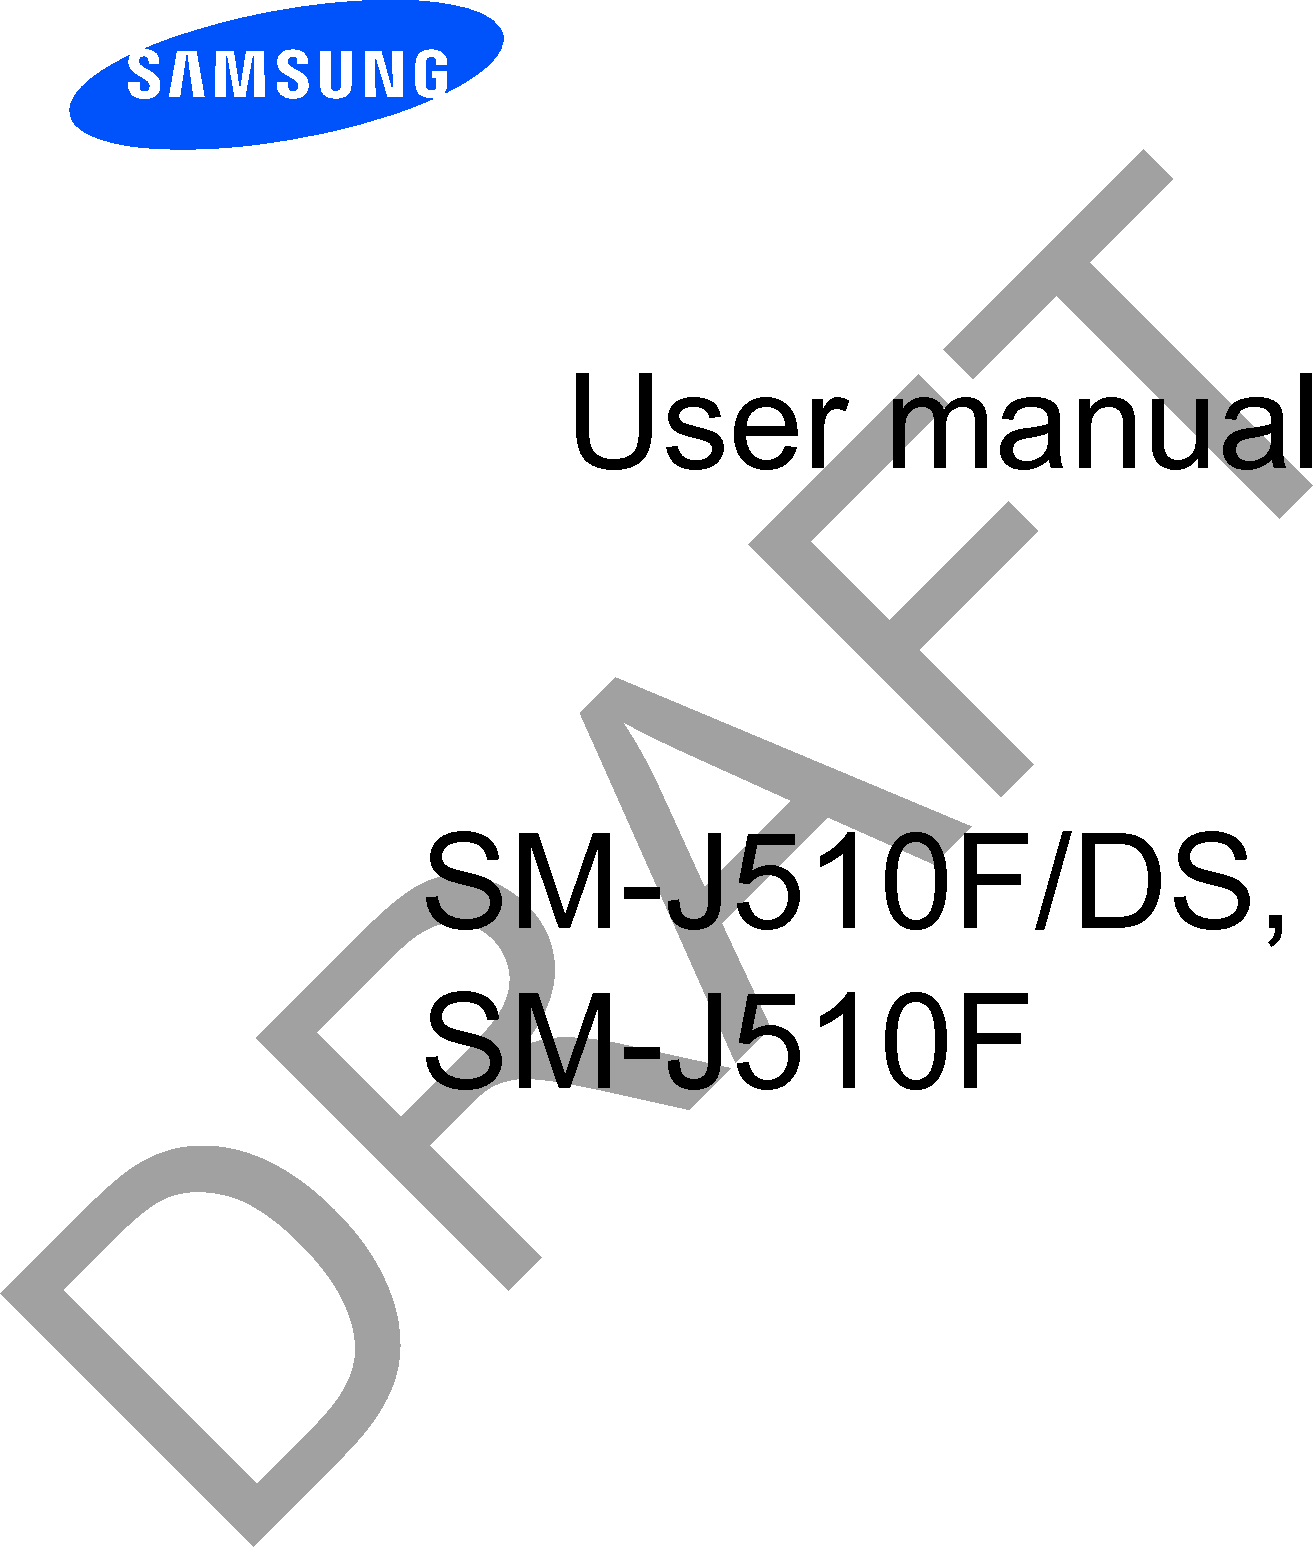 User manualSM-J510F/DS, SM-J510FDRAFT